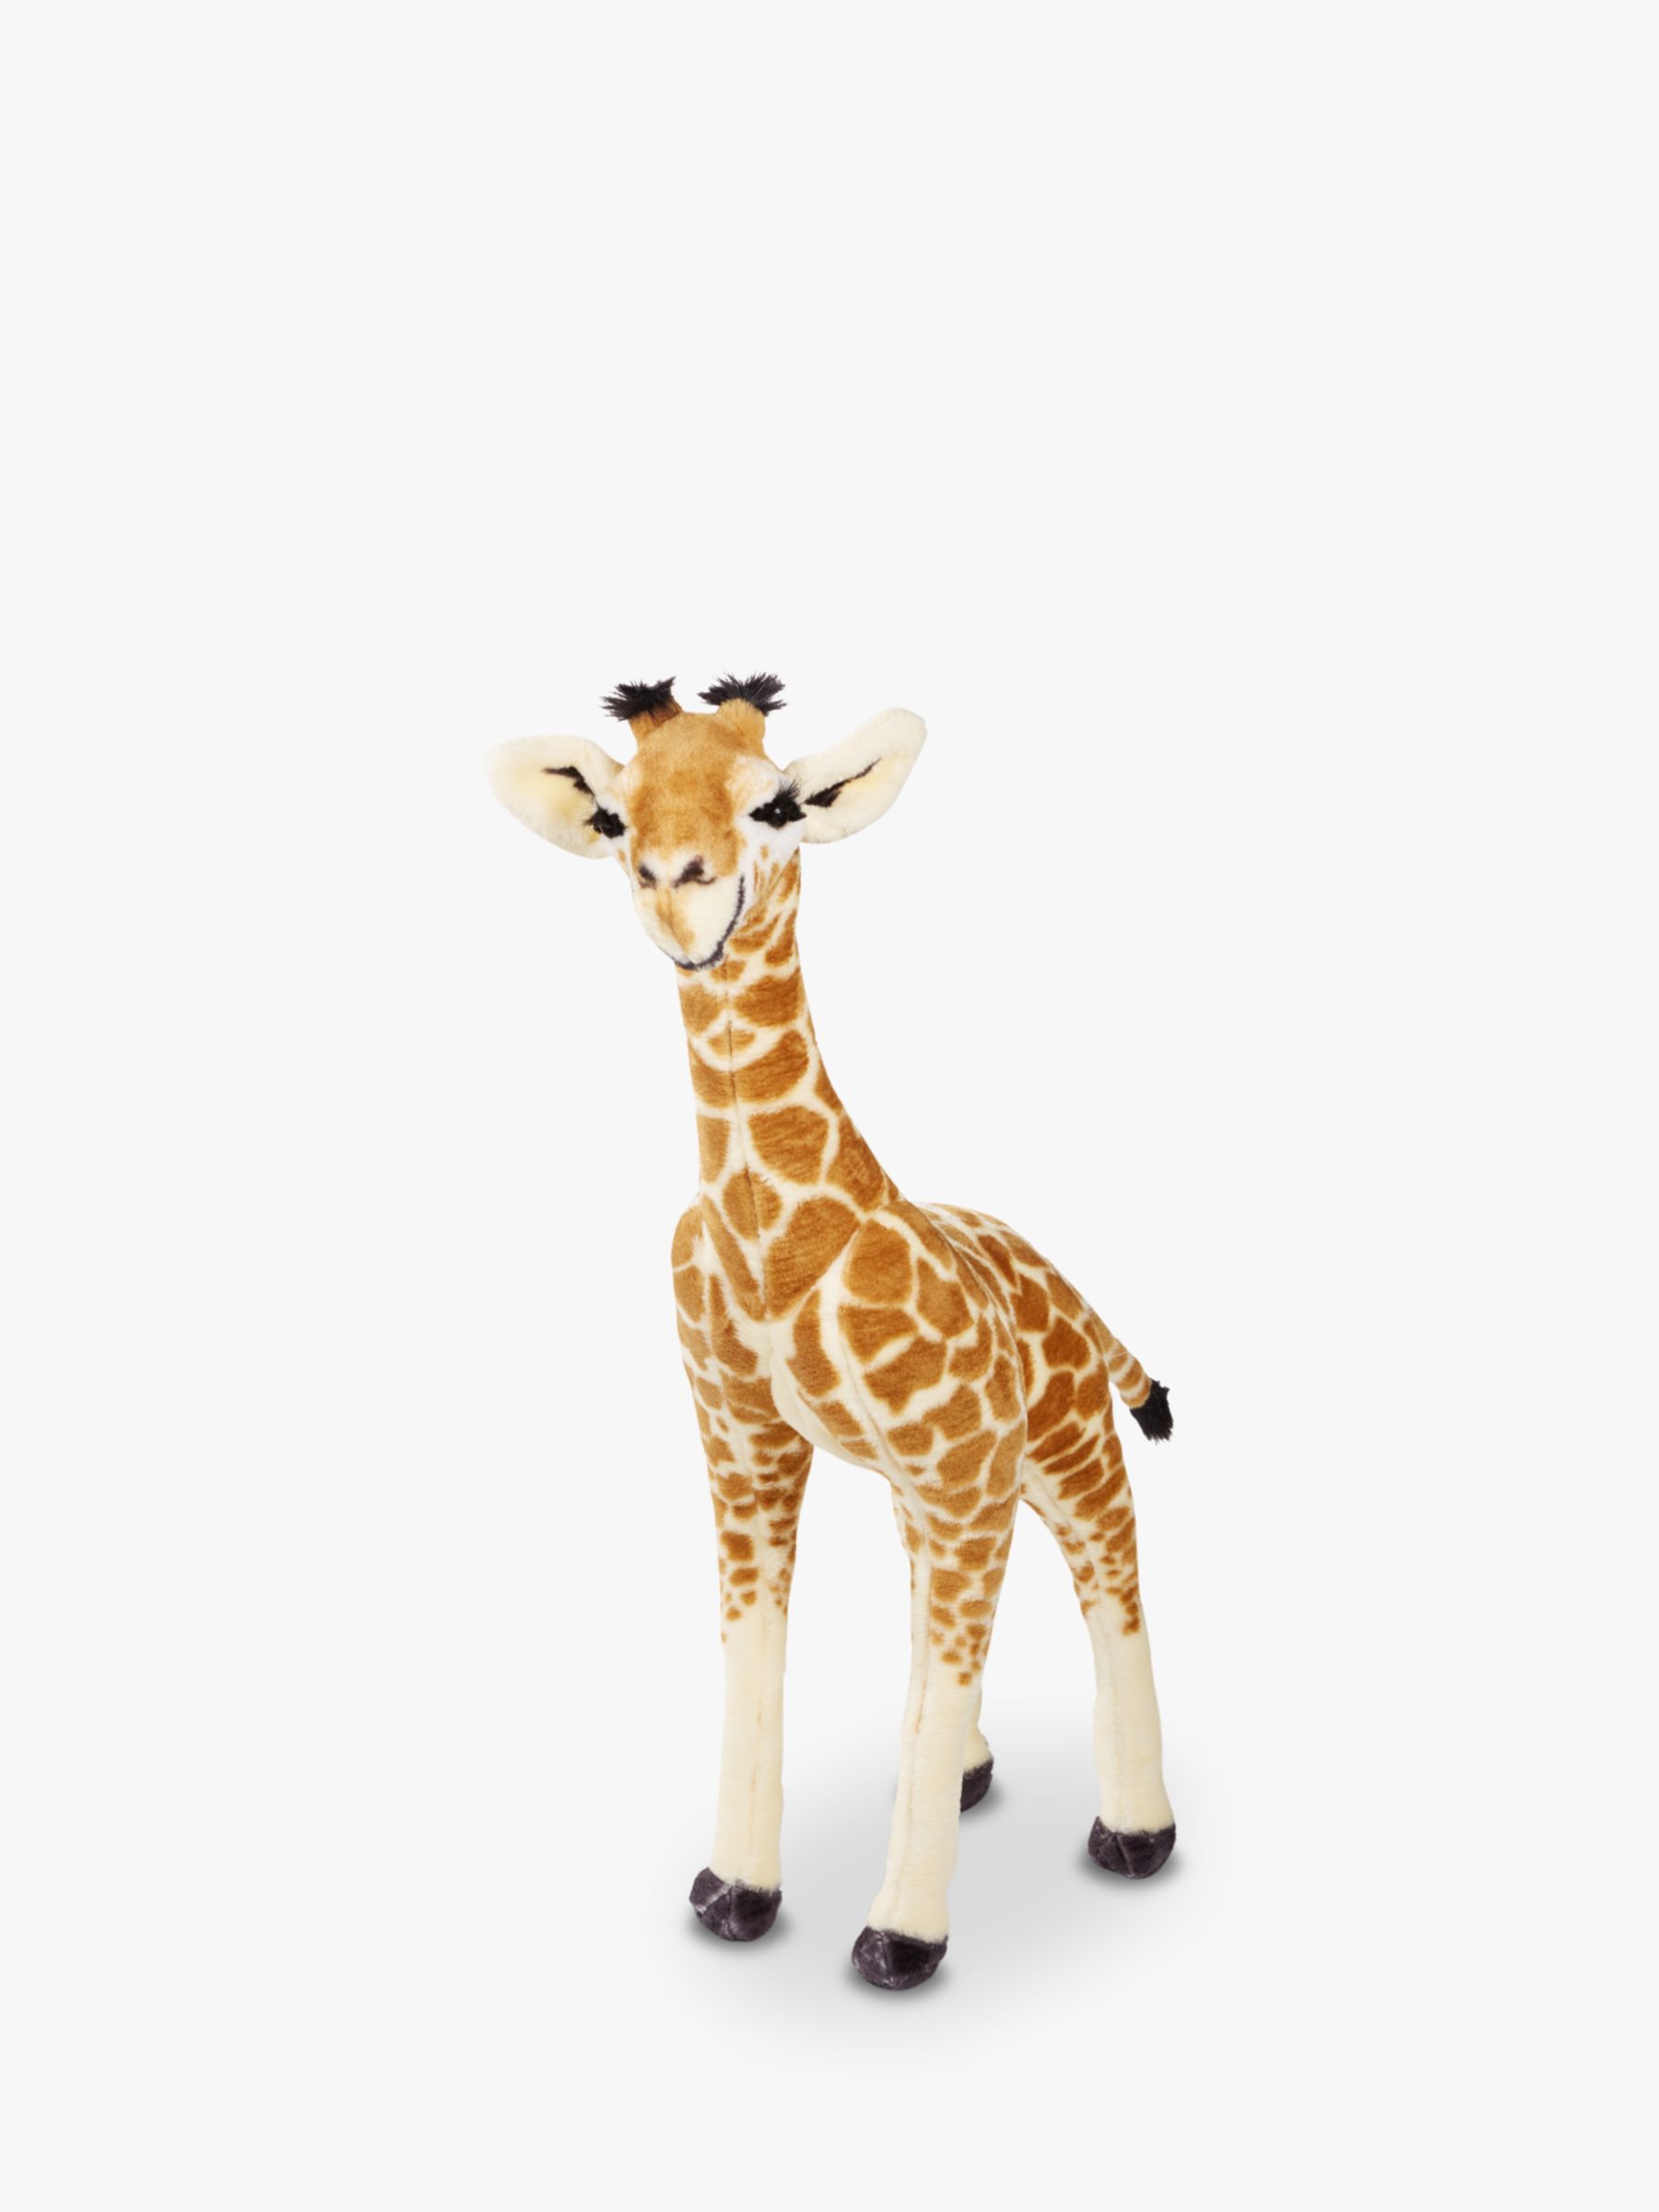 Small Giraffe Soft Toy